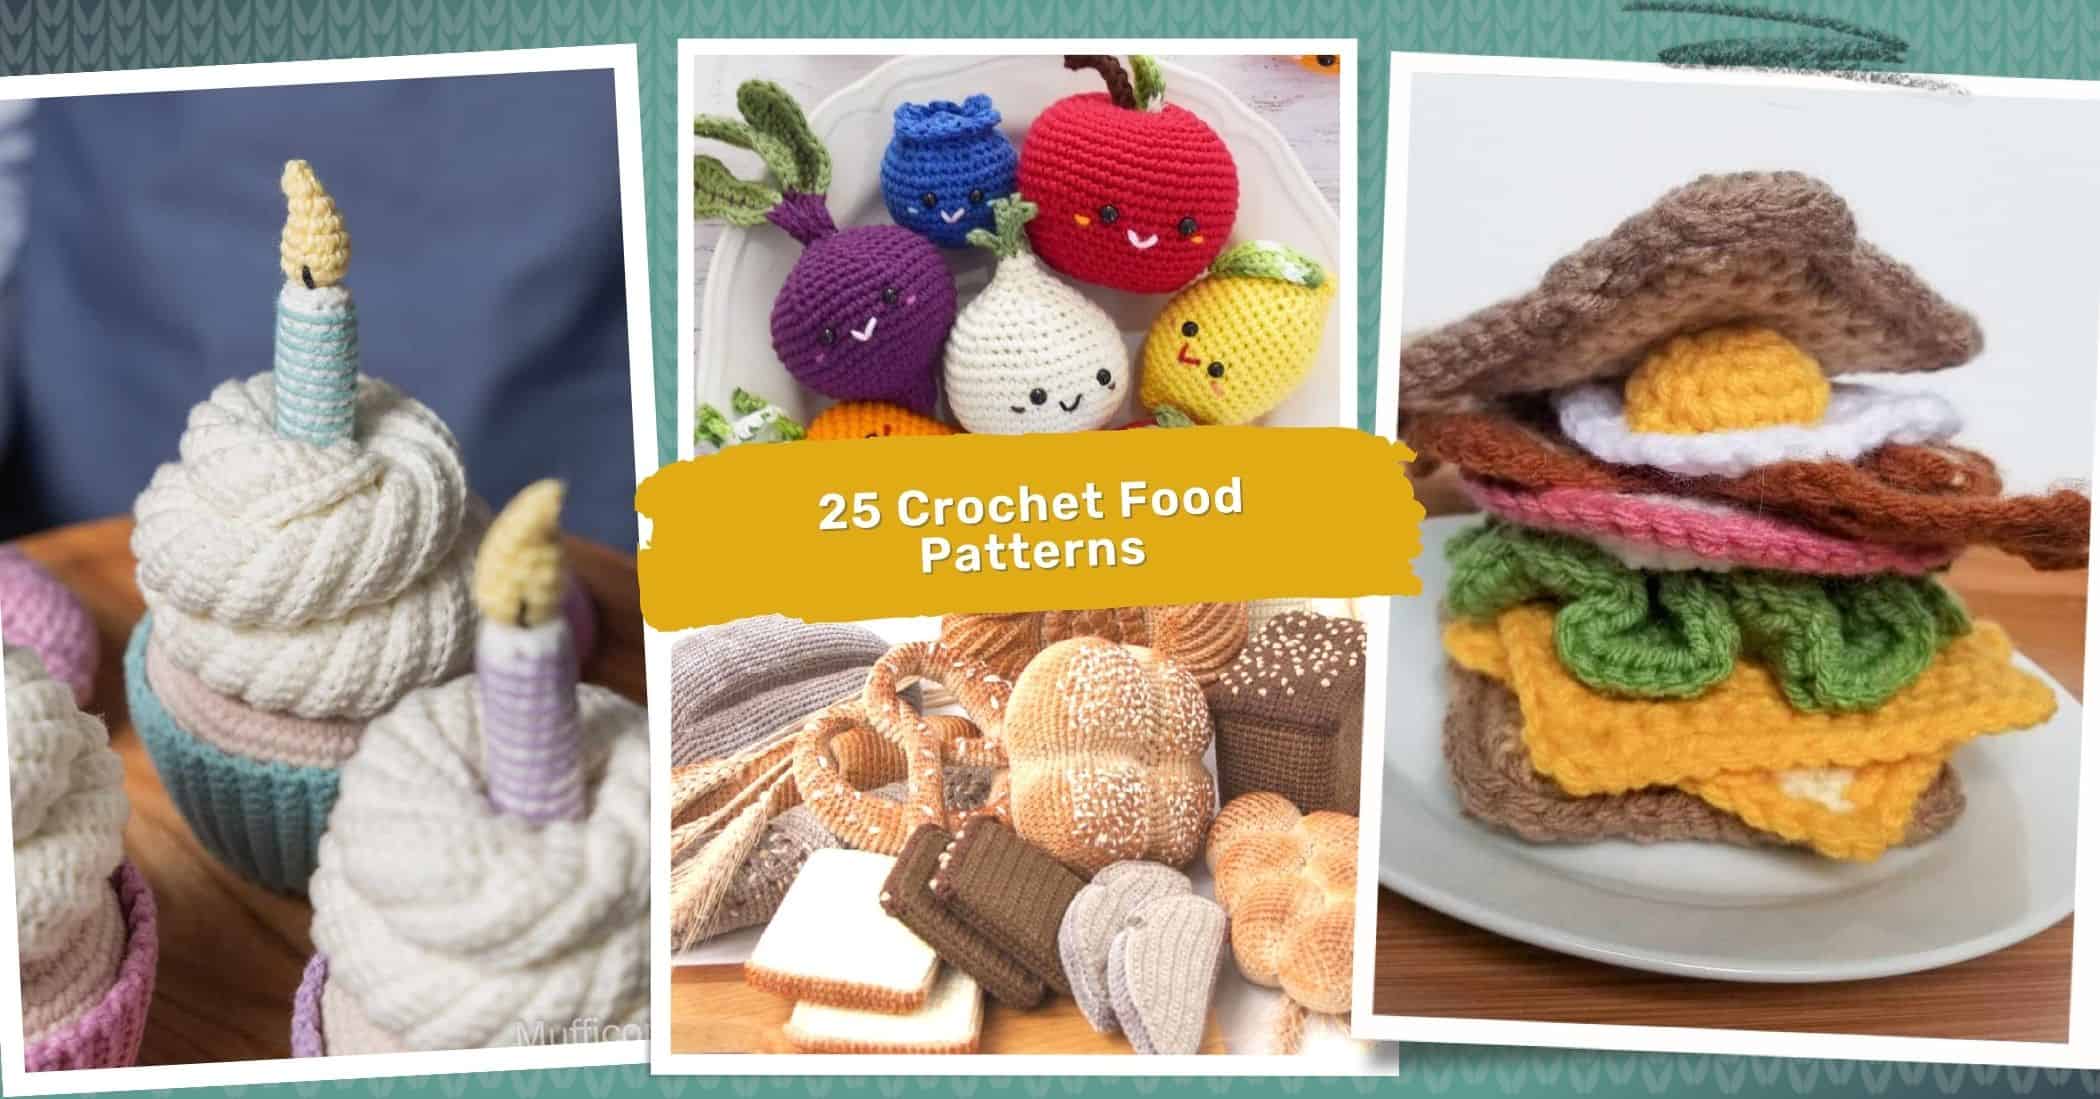 CROCHET PATTERN: Beginner Crochet Pickle Play Food, Amigurumi Veget